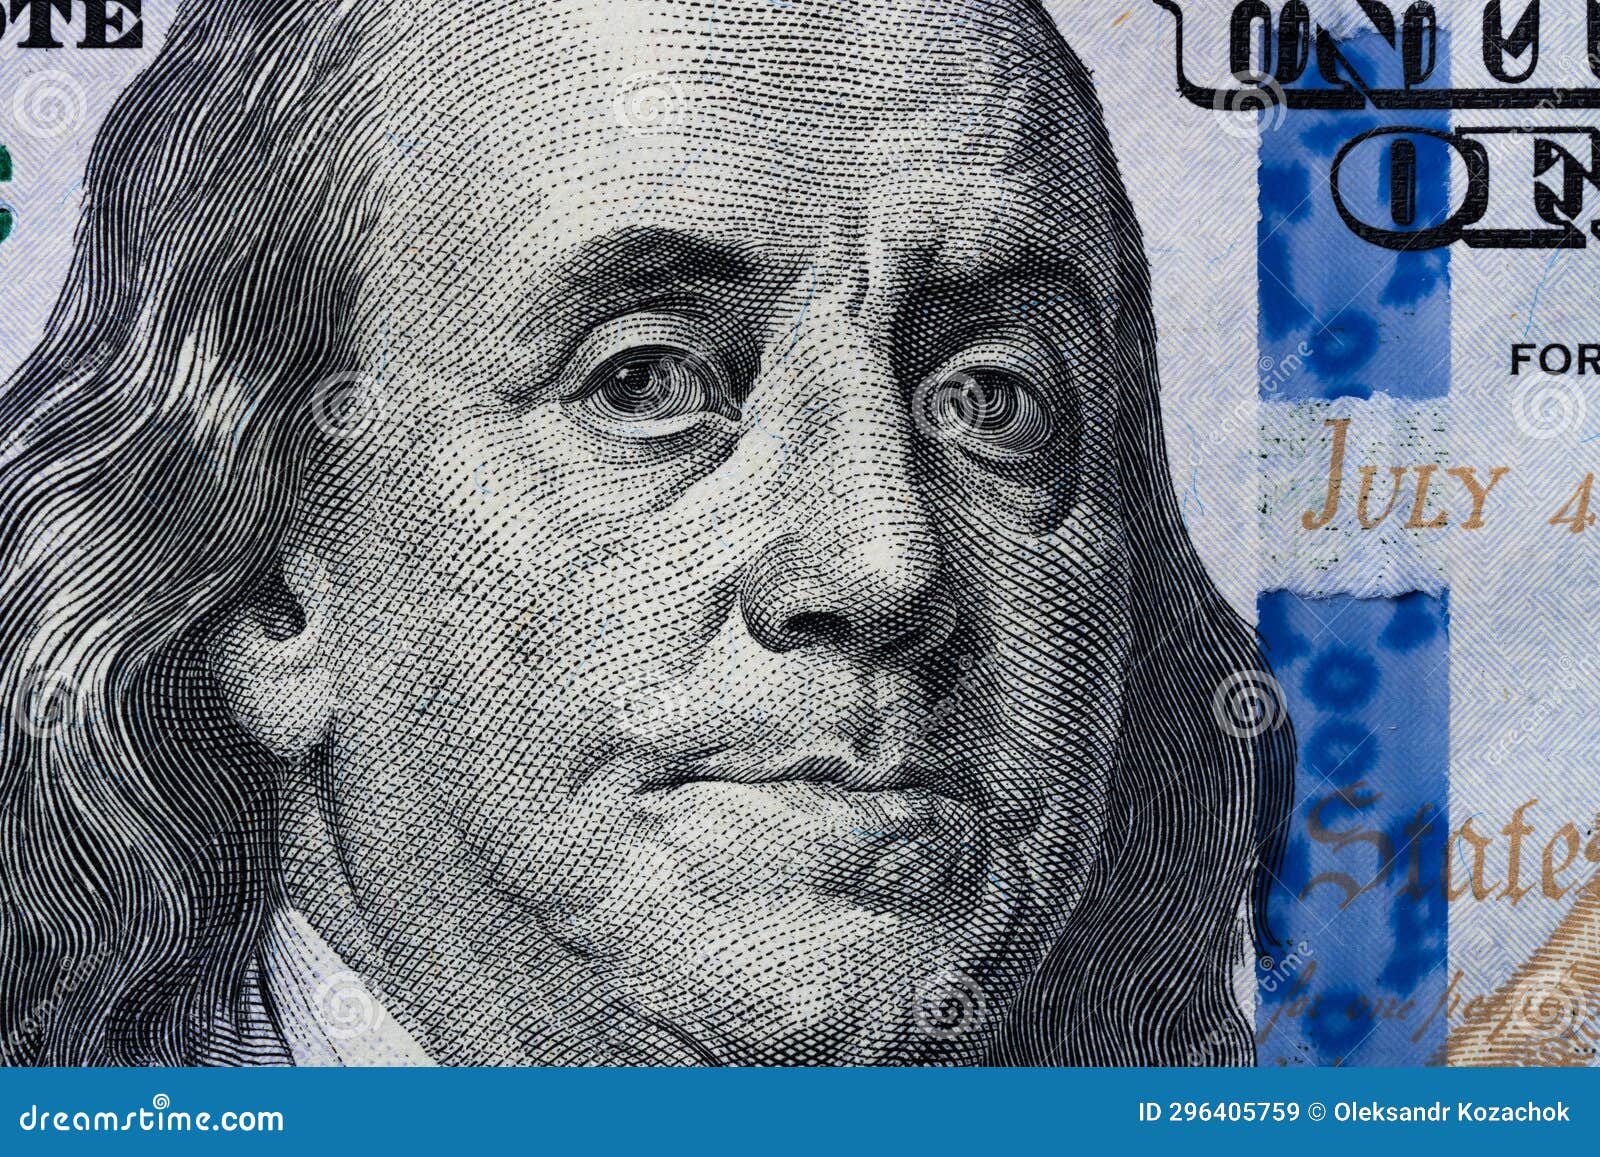 Closeup Portrait Benjamin Franklin on 100 Us Dollar Bill. Stock Image ...